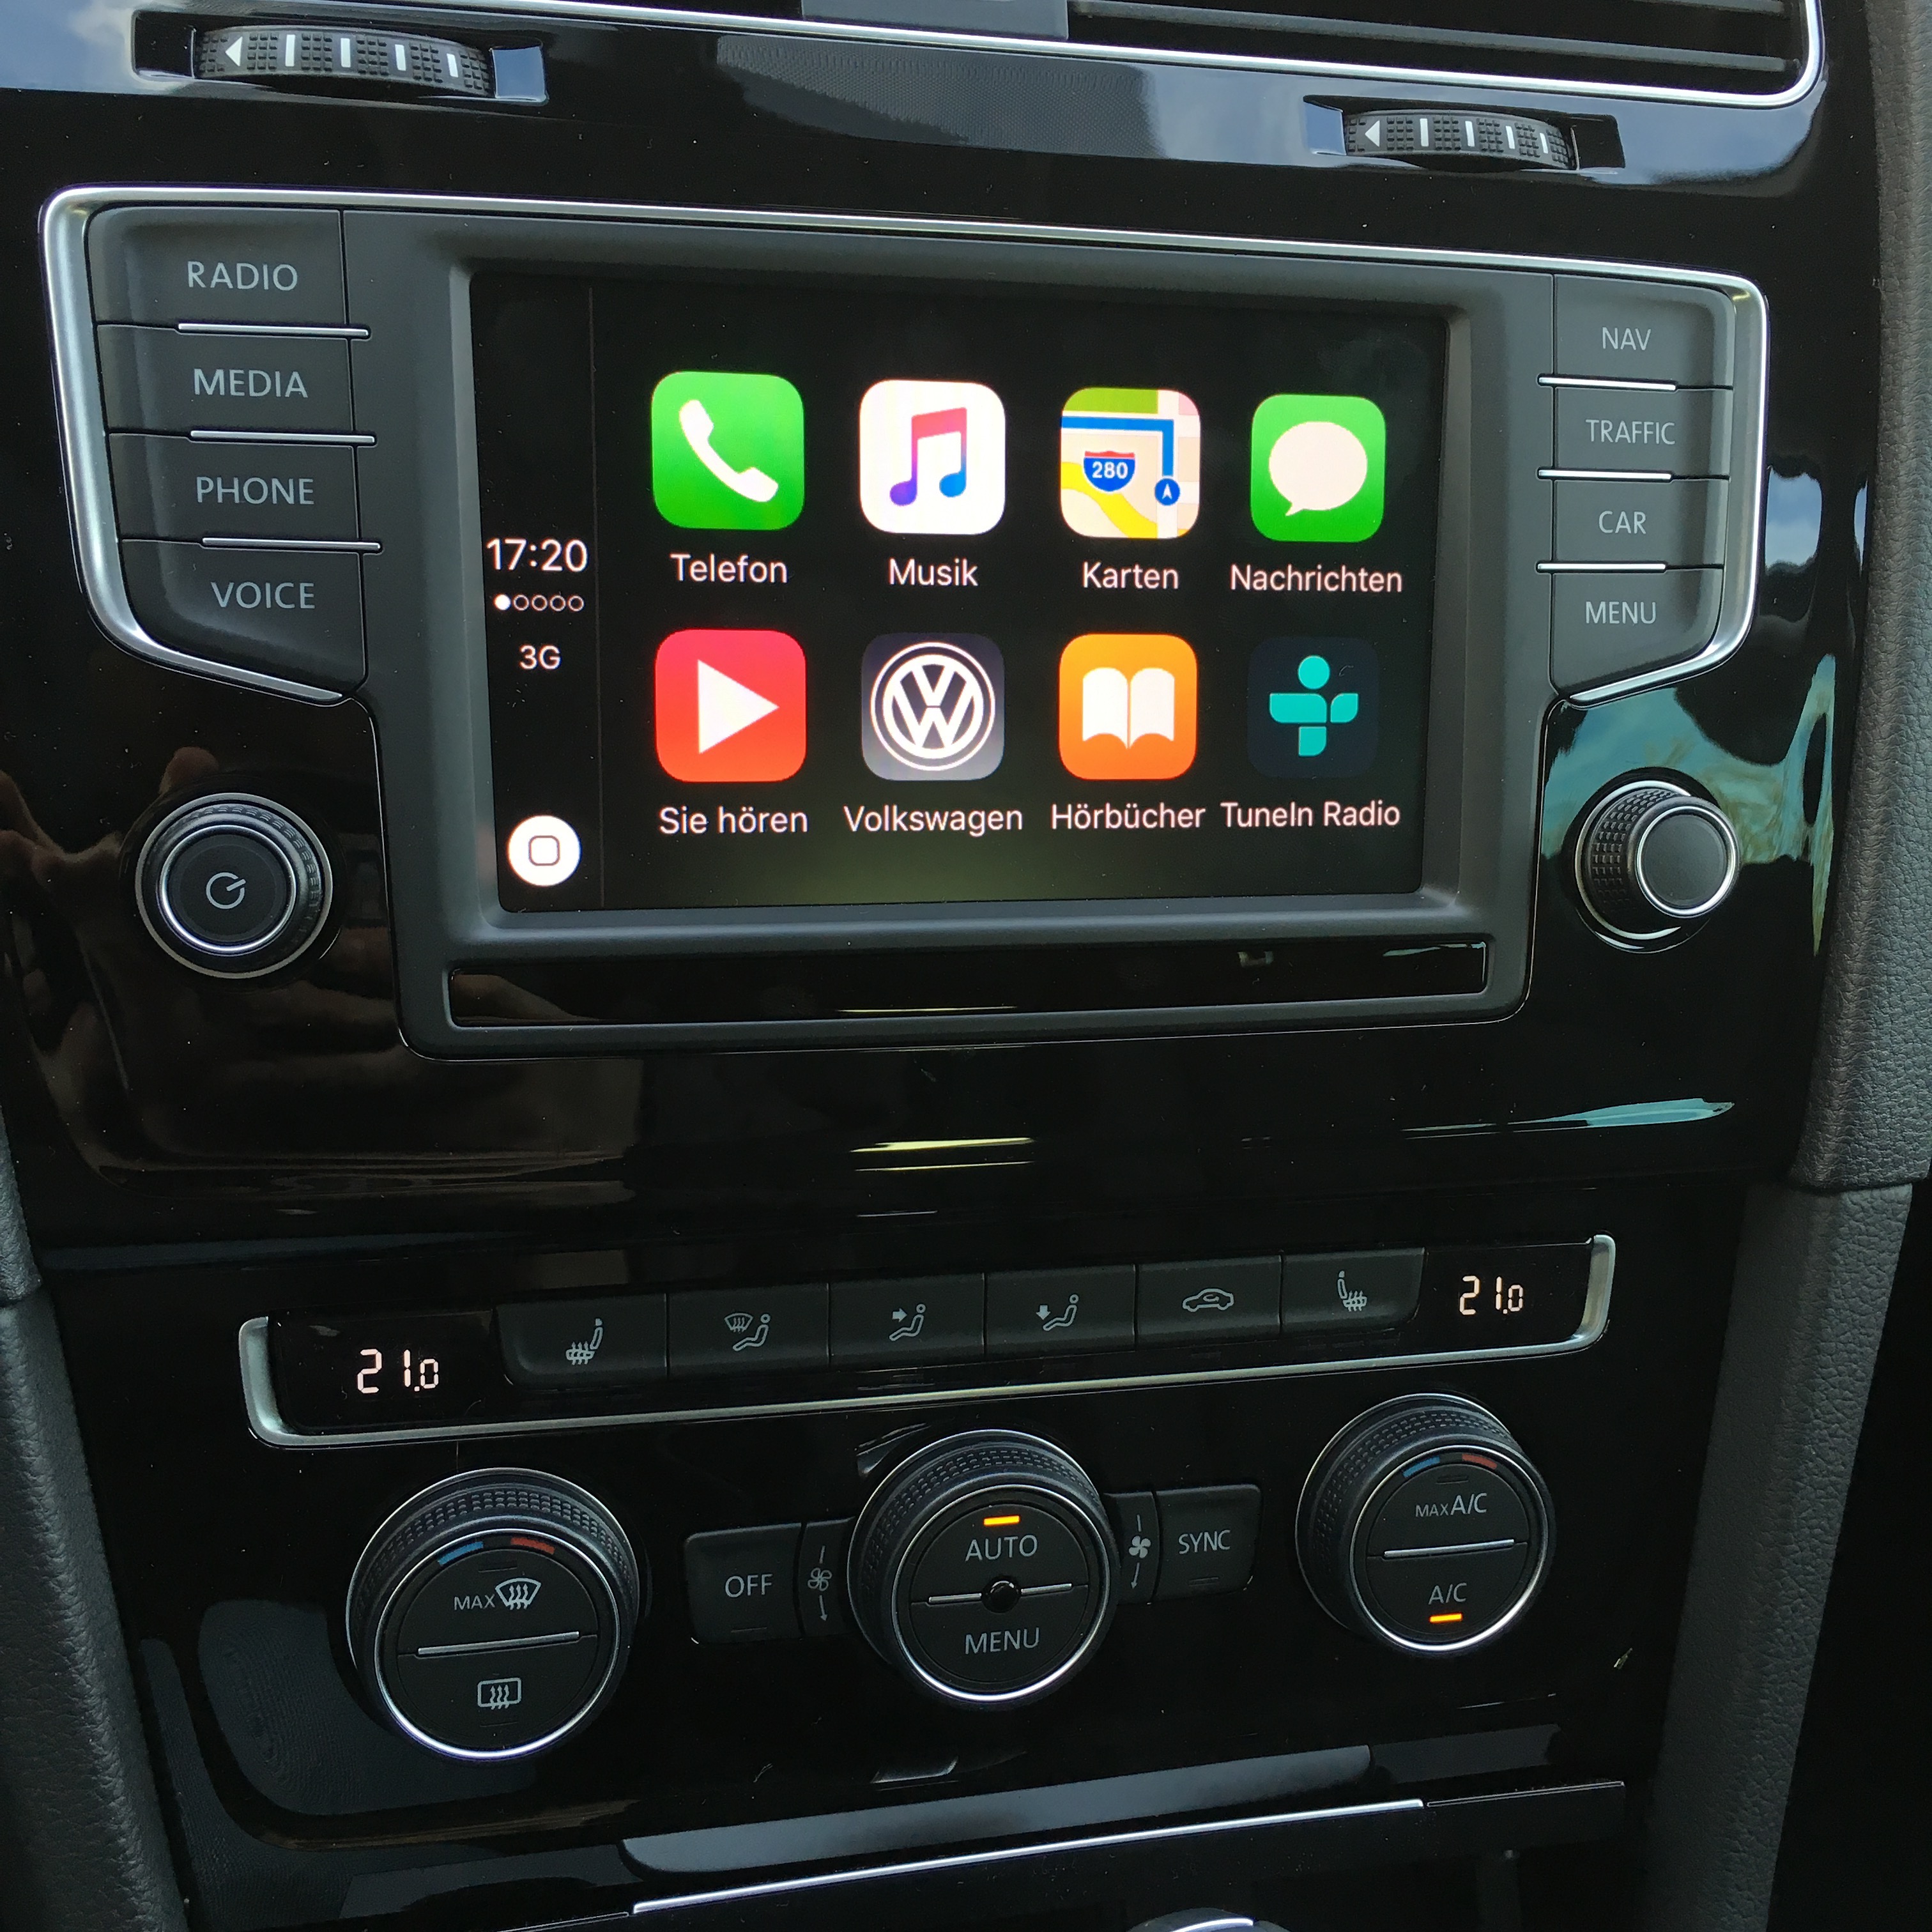 Auto: Touchscreen wie Smartphone